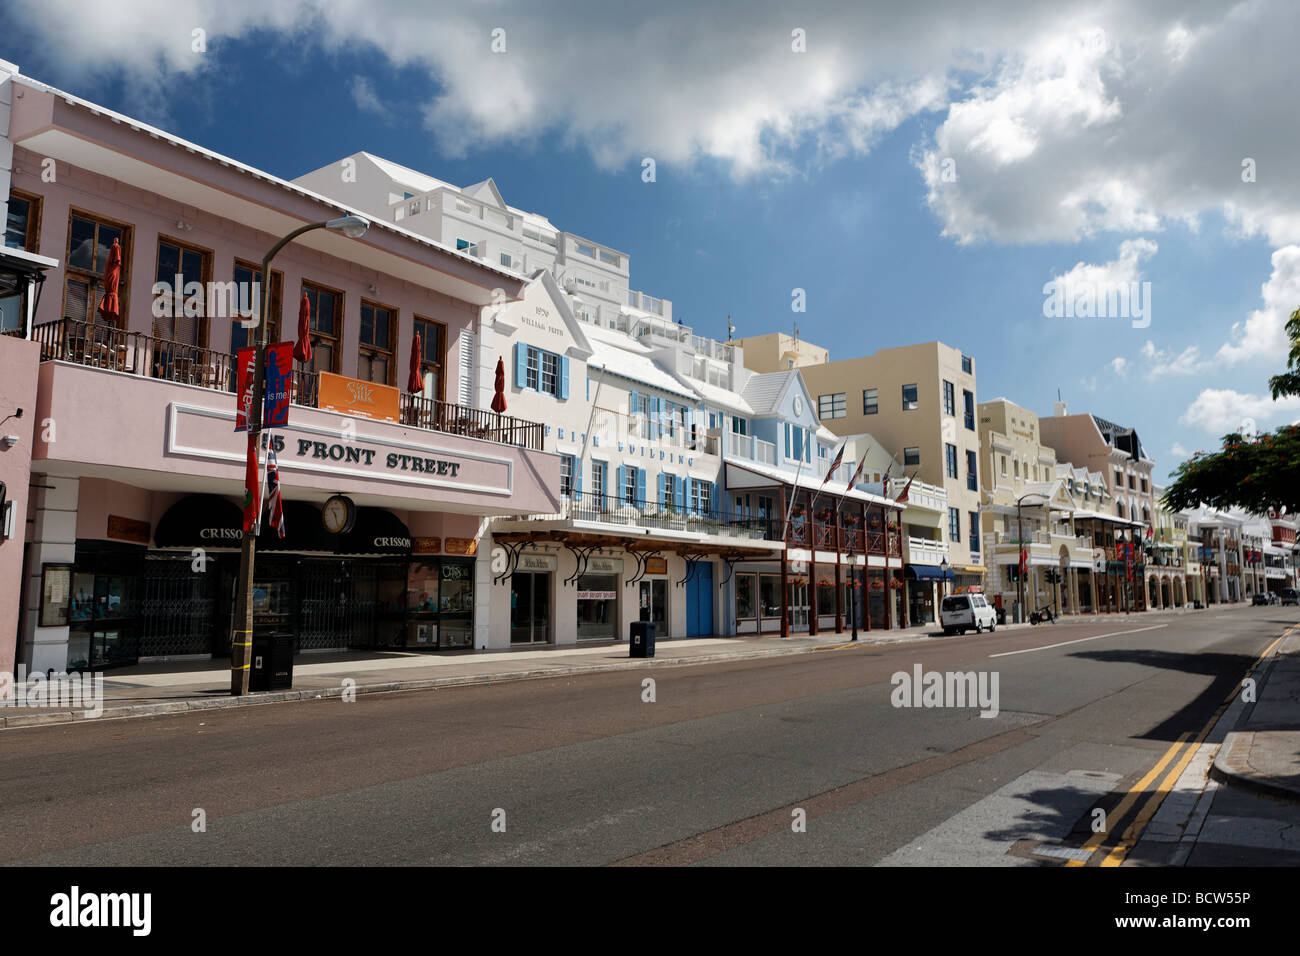 Buildings along a street, Front Street, Hamilton, Bermuda Stock Photo